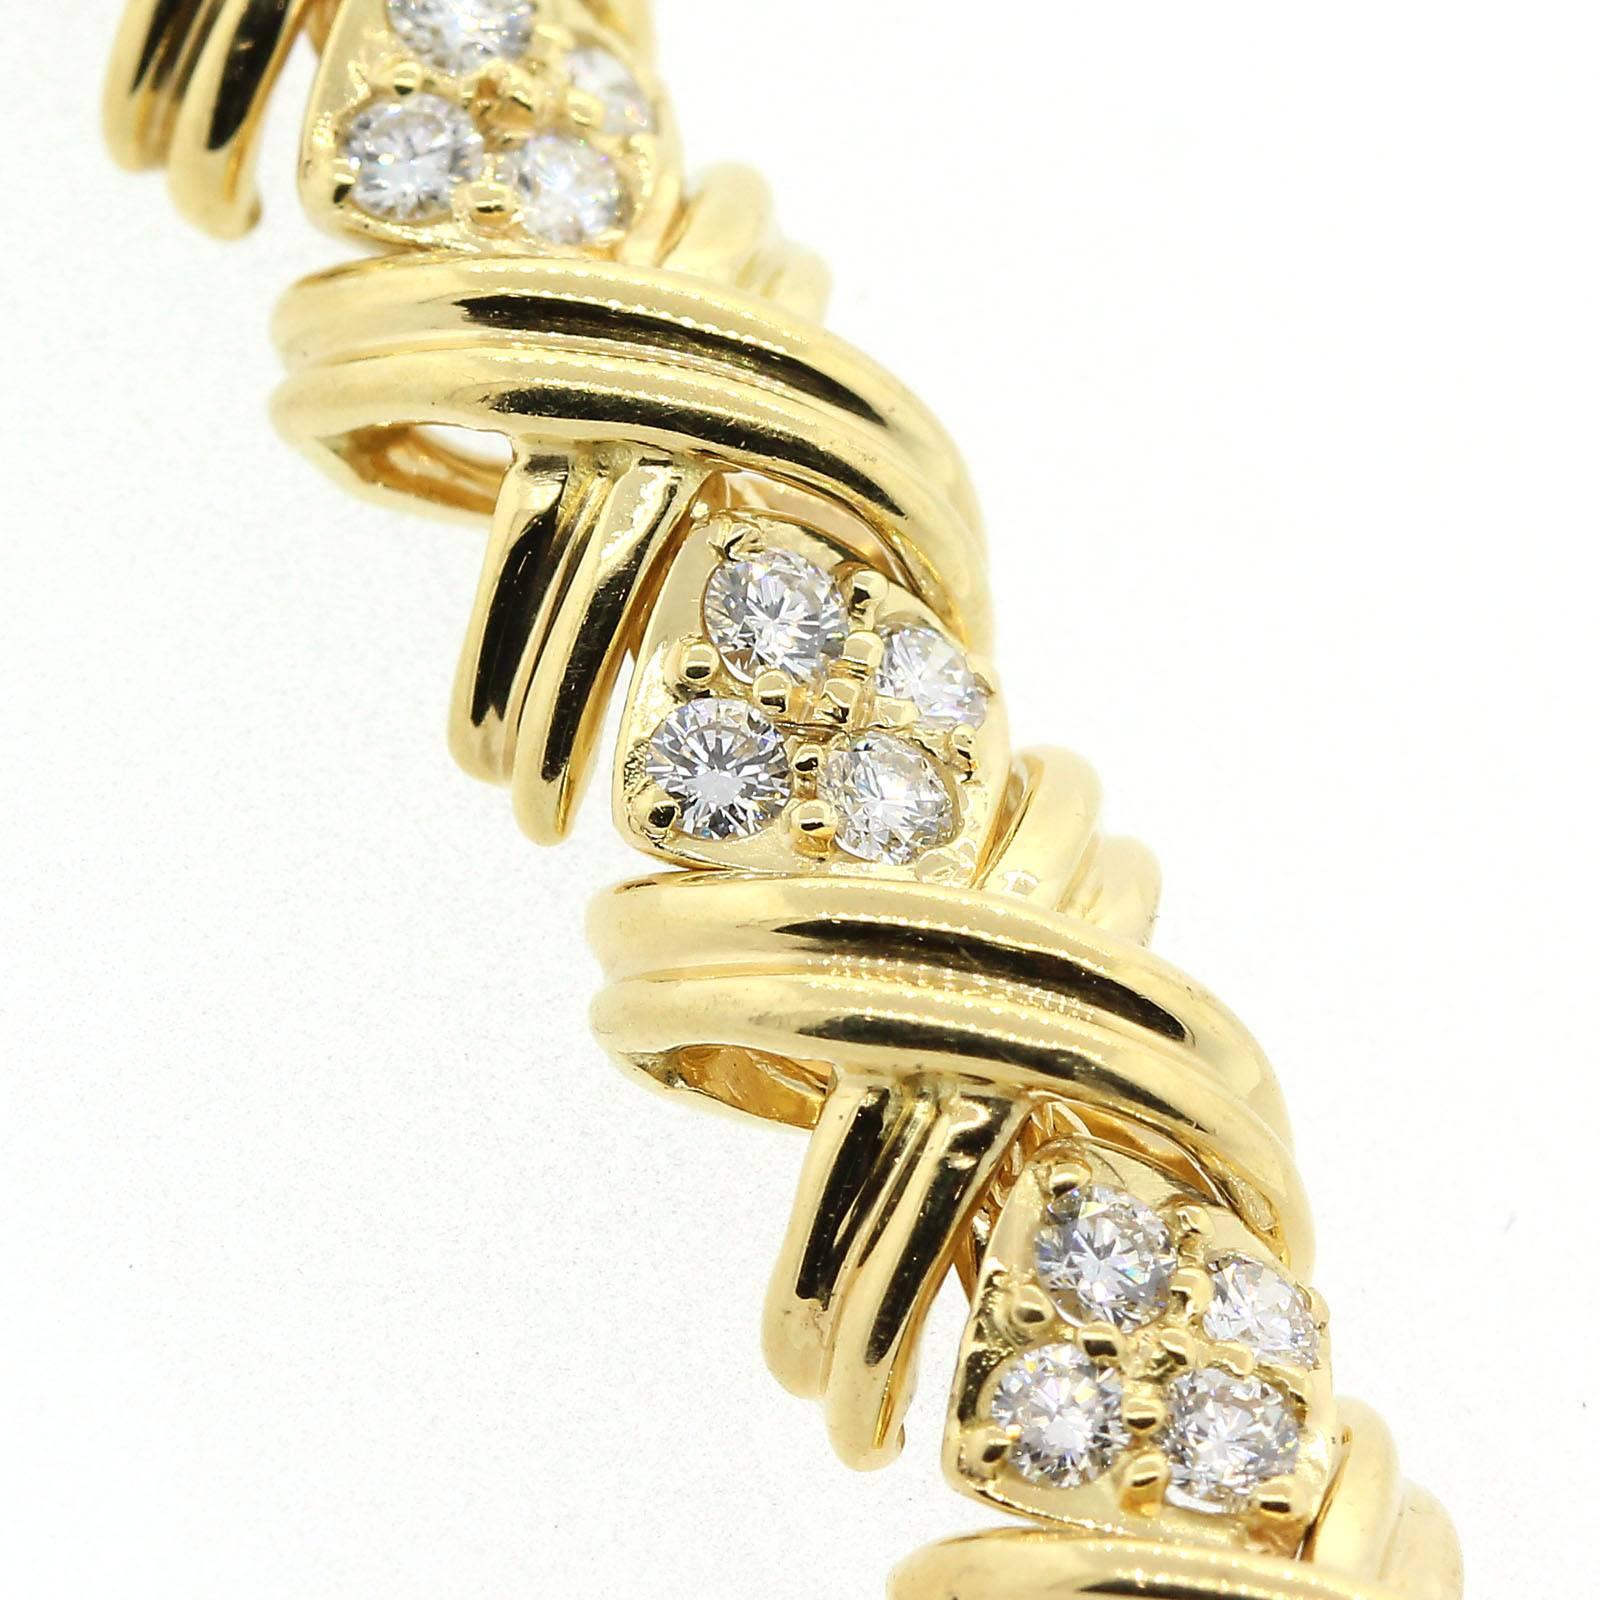 xoxo gold bracelet